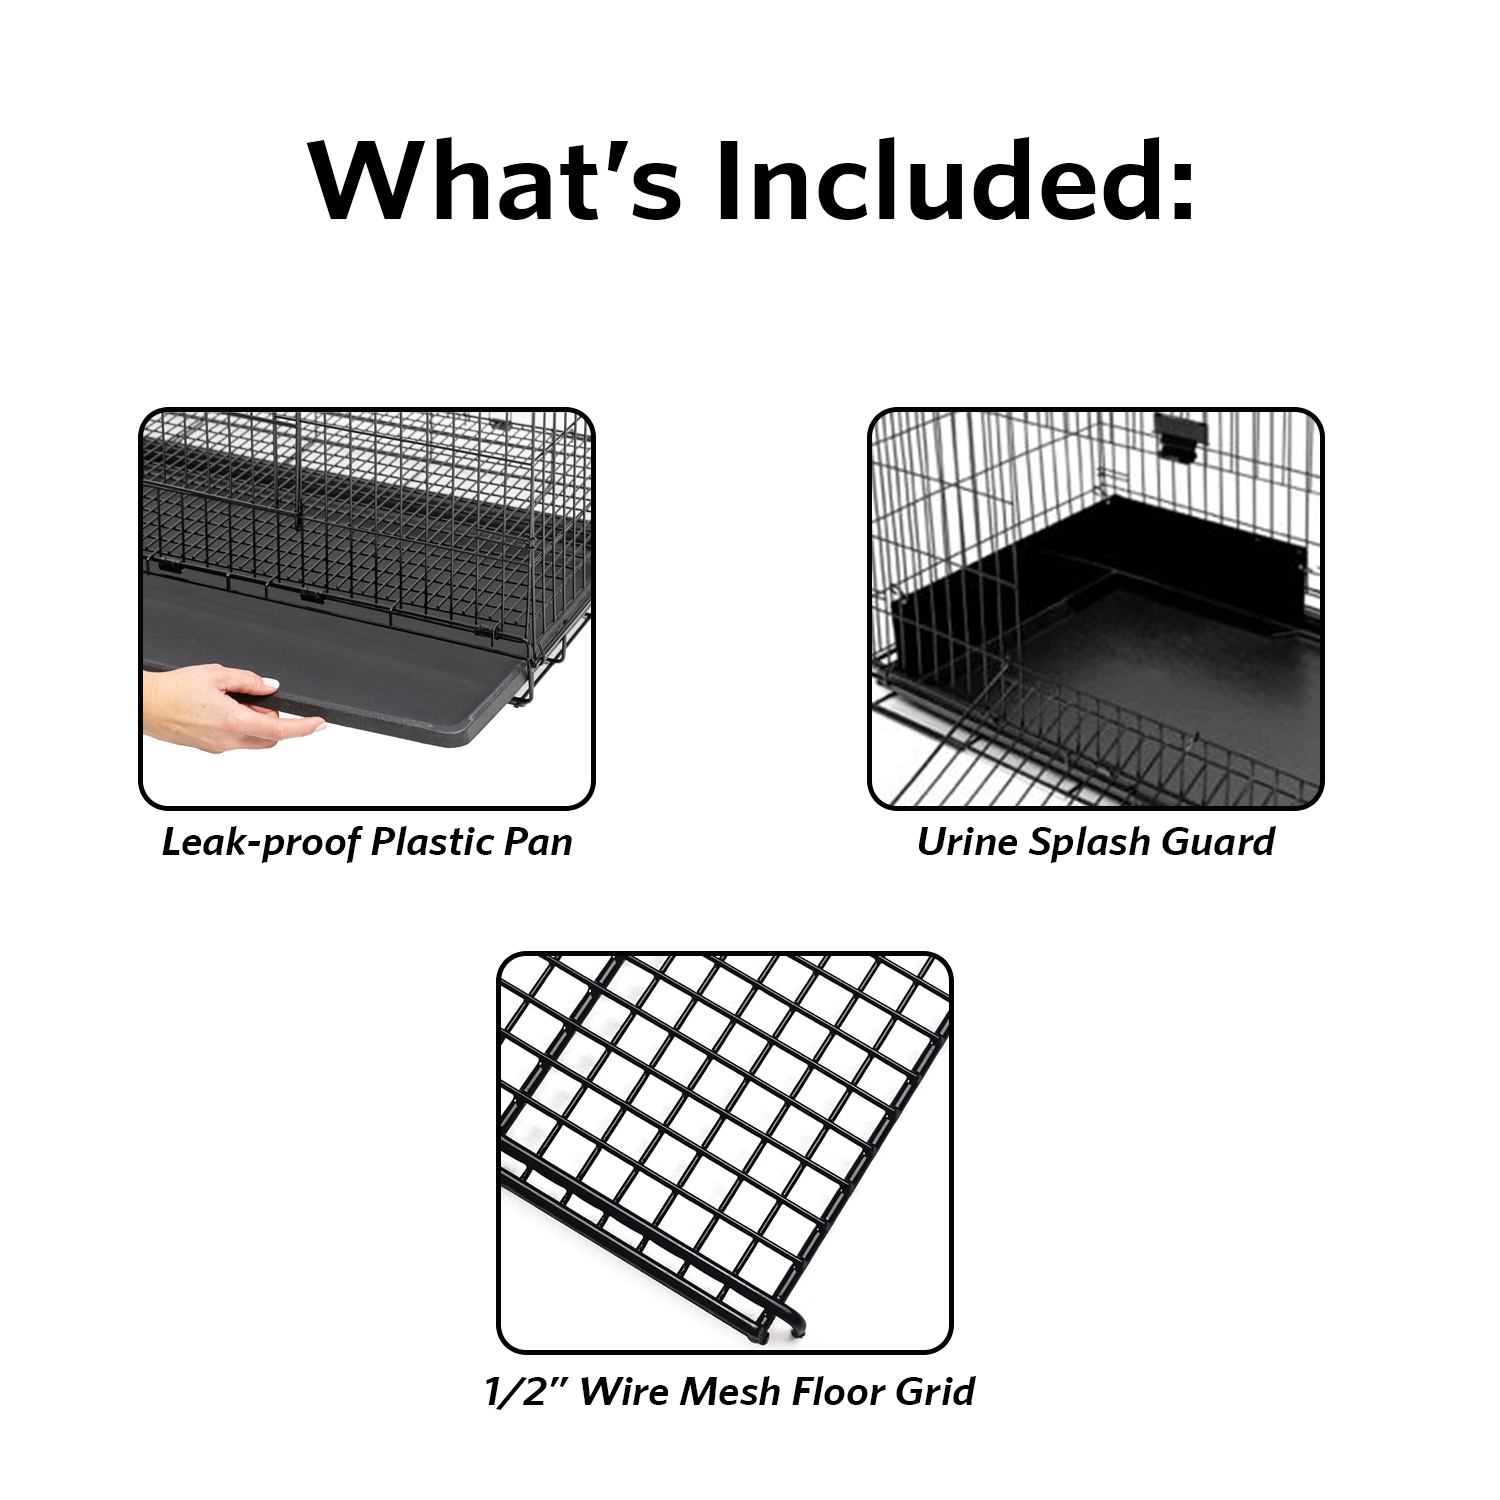 MidWest Wabbitat Folding Rabbit Cage